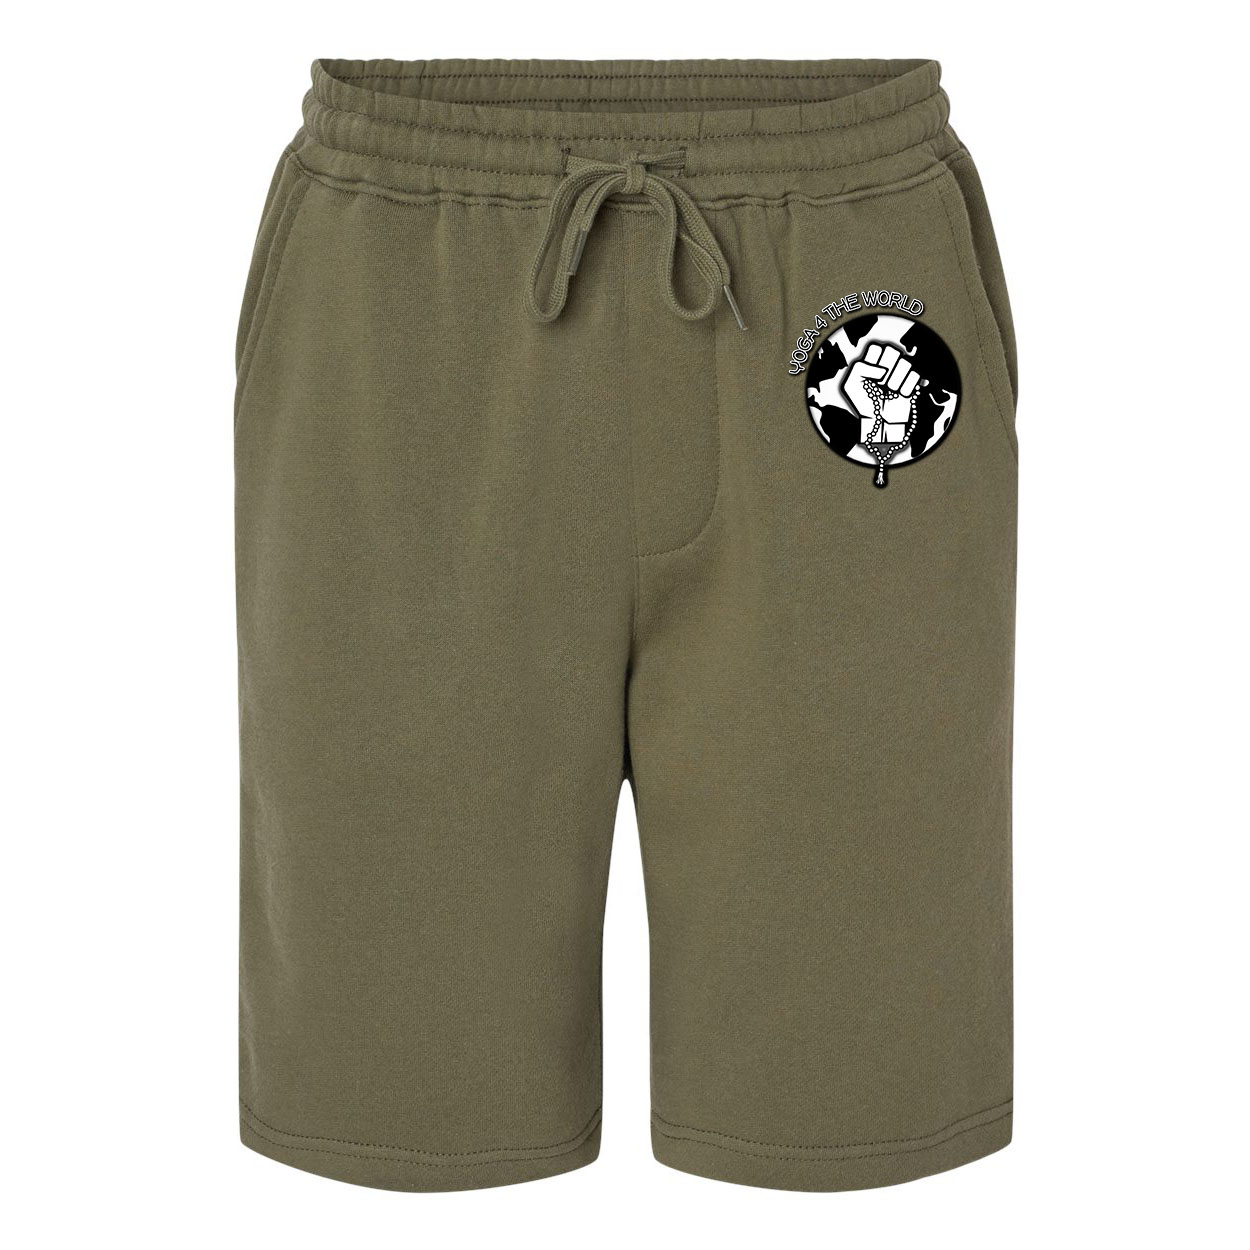 Yoga4TheWorld Army Fleece Shorts